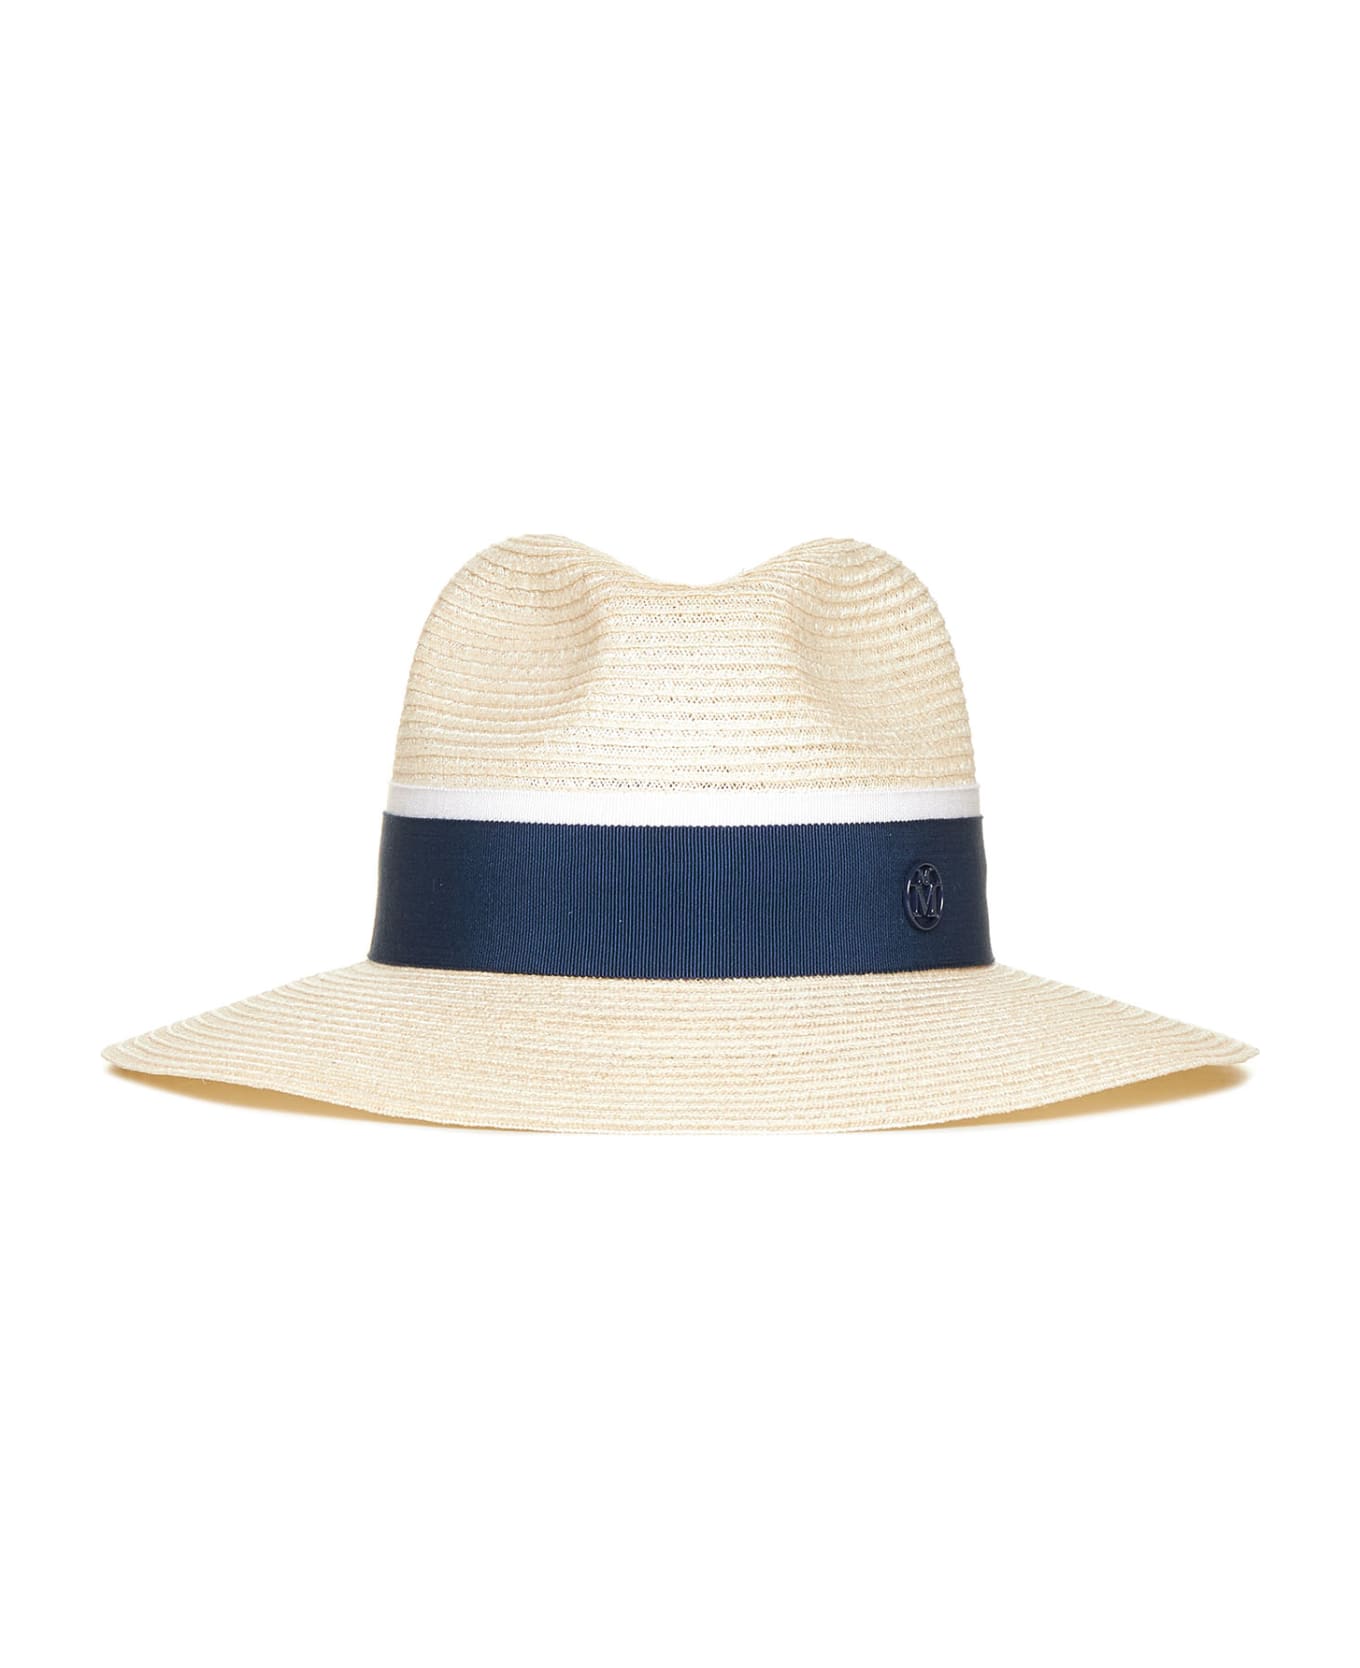 Maison Michel Hat - Natural navy 帽子